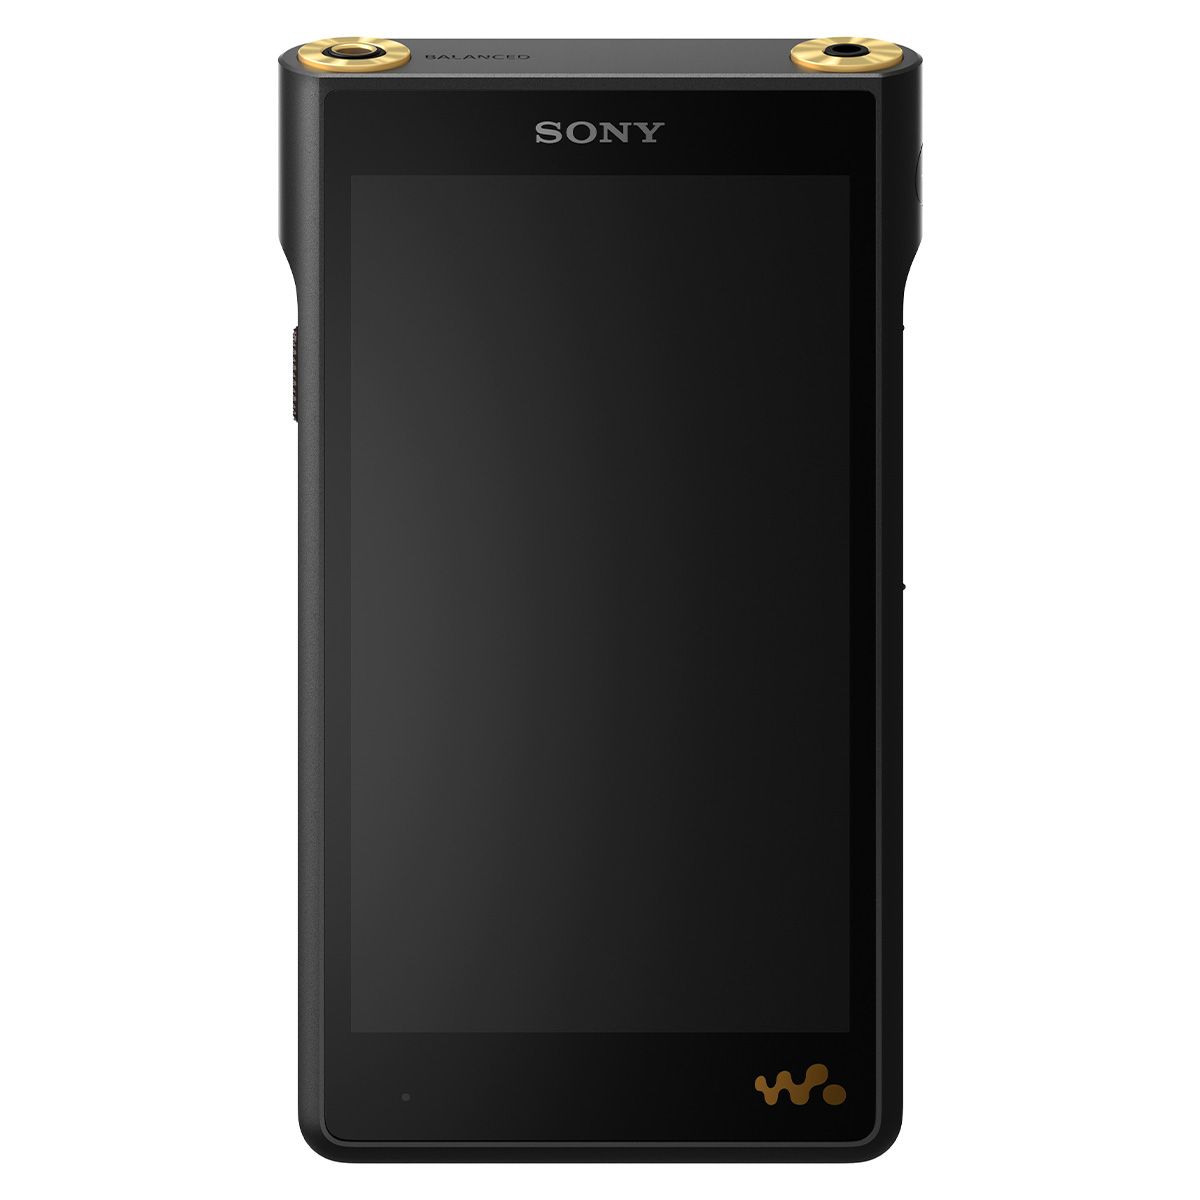 Sony WM1AM2 Walkman Digital Music Player - angled top view with blank screen